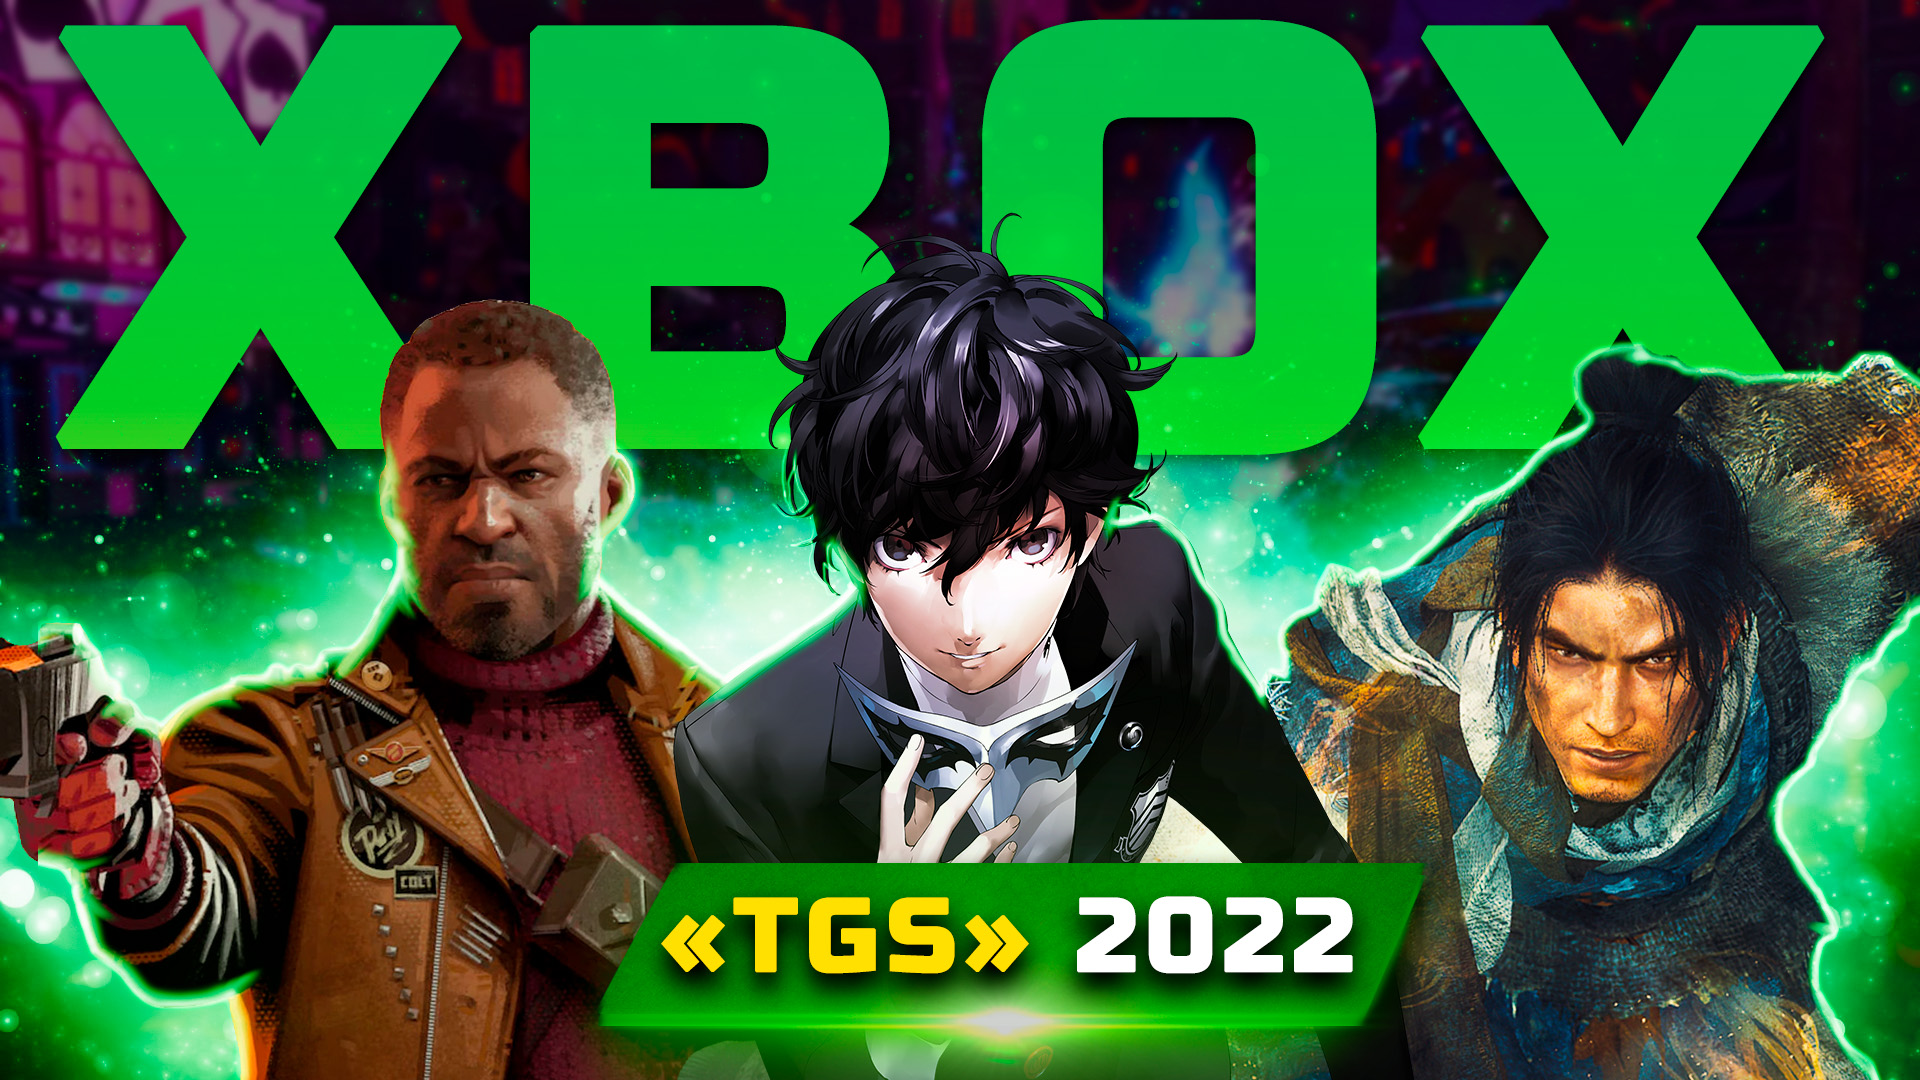 Трансляция Xbox Showcase TGS 2022 | Показали:Wo Long: Fallen Dynasty, Persona 5, Palworld, Exoprimal